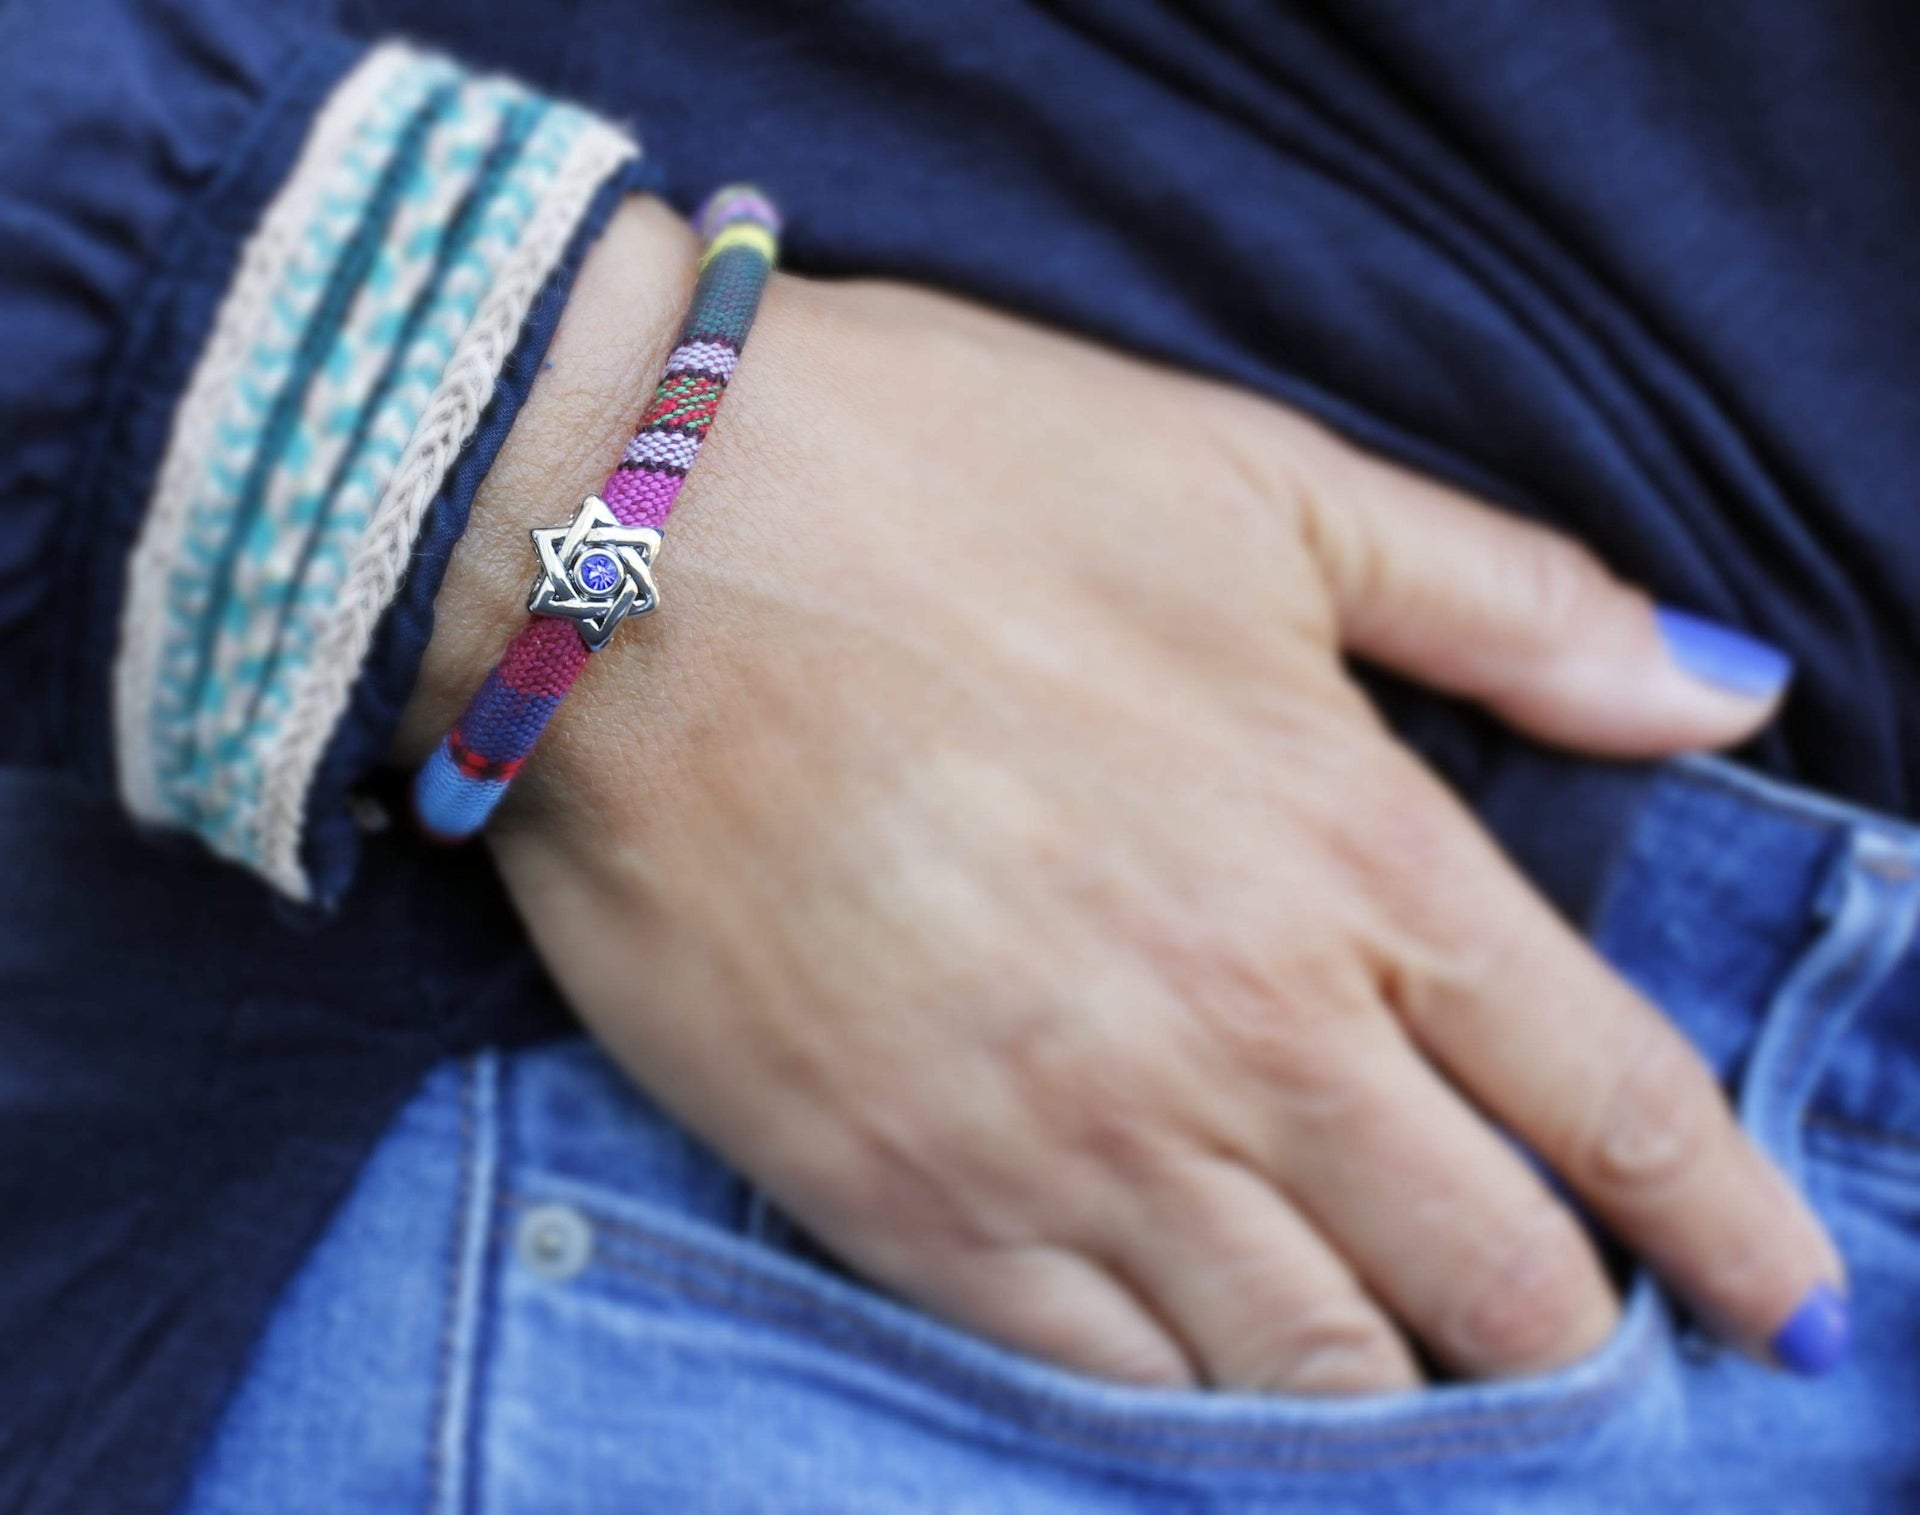 Colorful Thread Friendship Bracelets - One Tribe Apparel